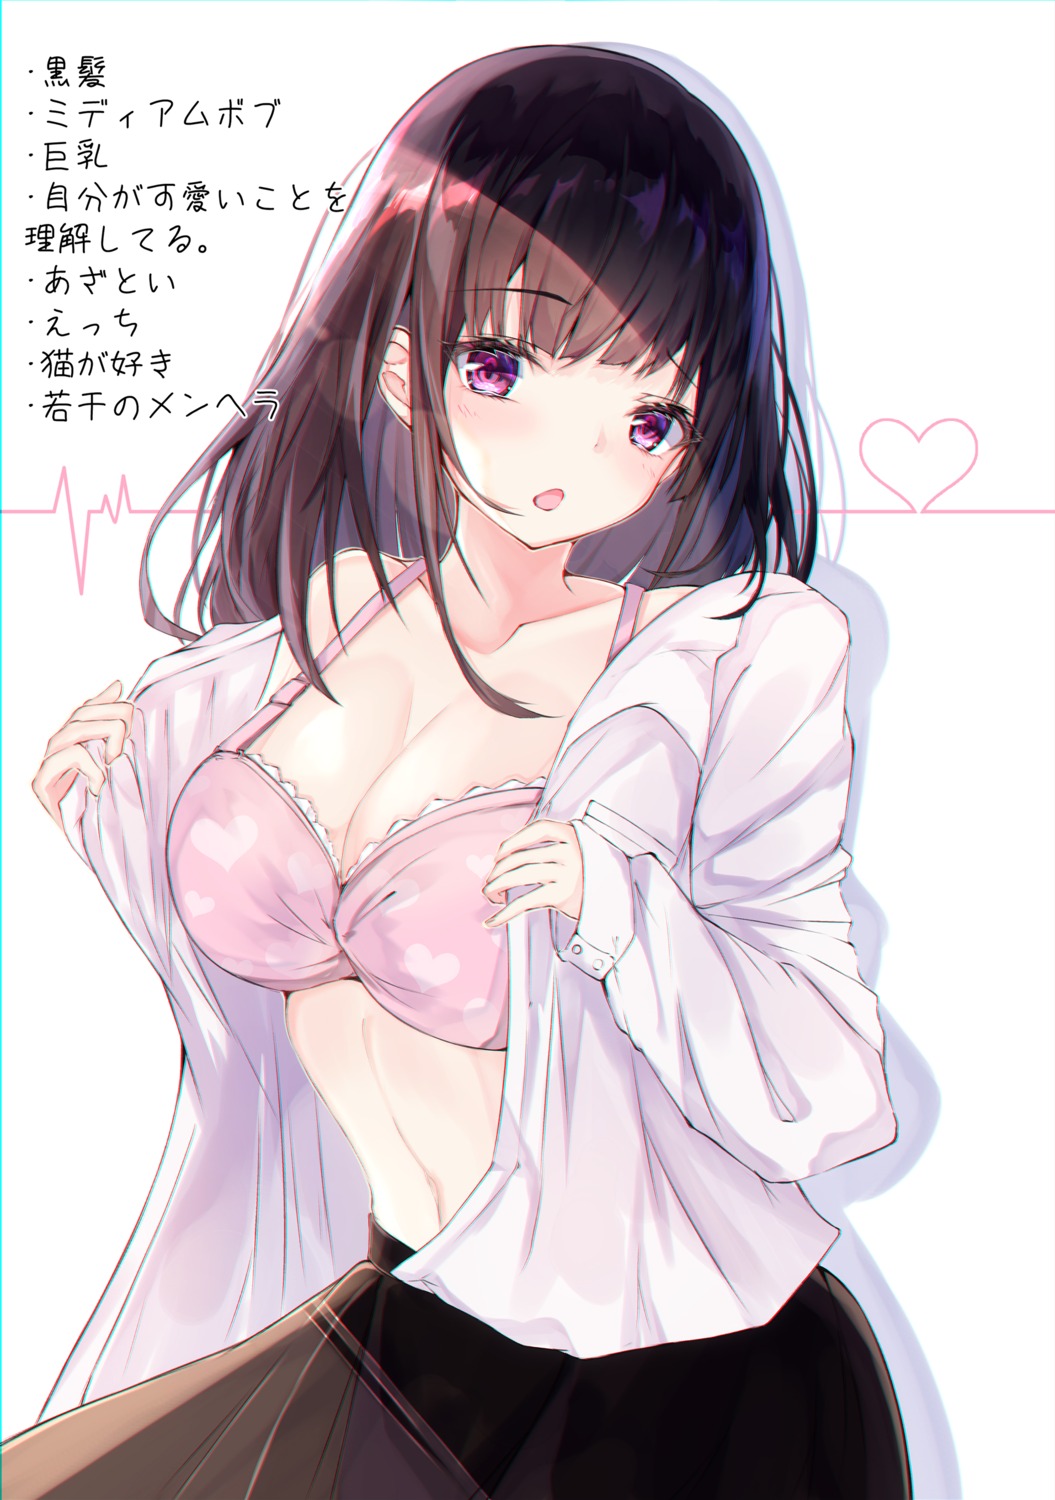 bra cleavage kei_(limited_girl) limited_girl open_shirt seifuku undressing